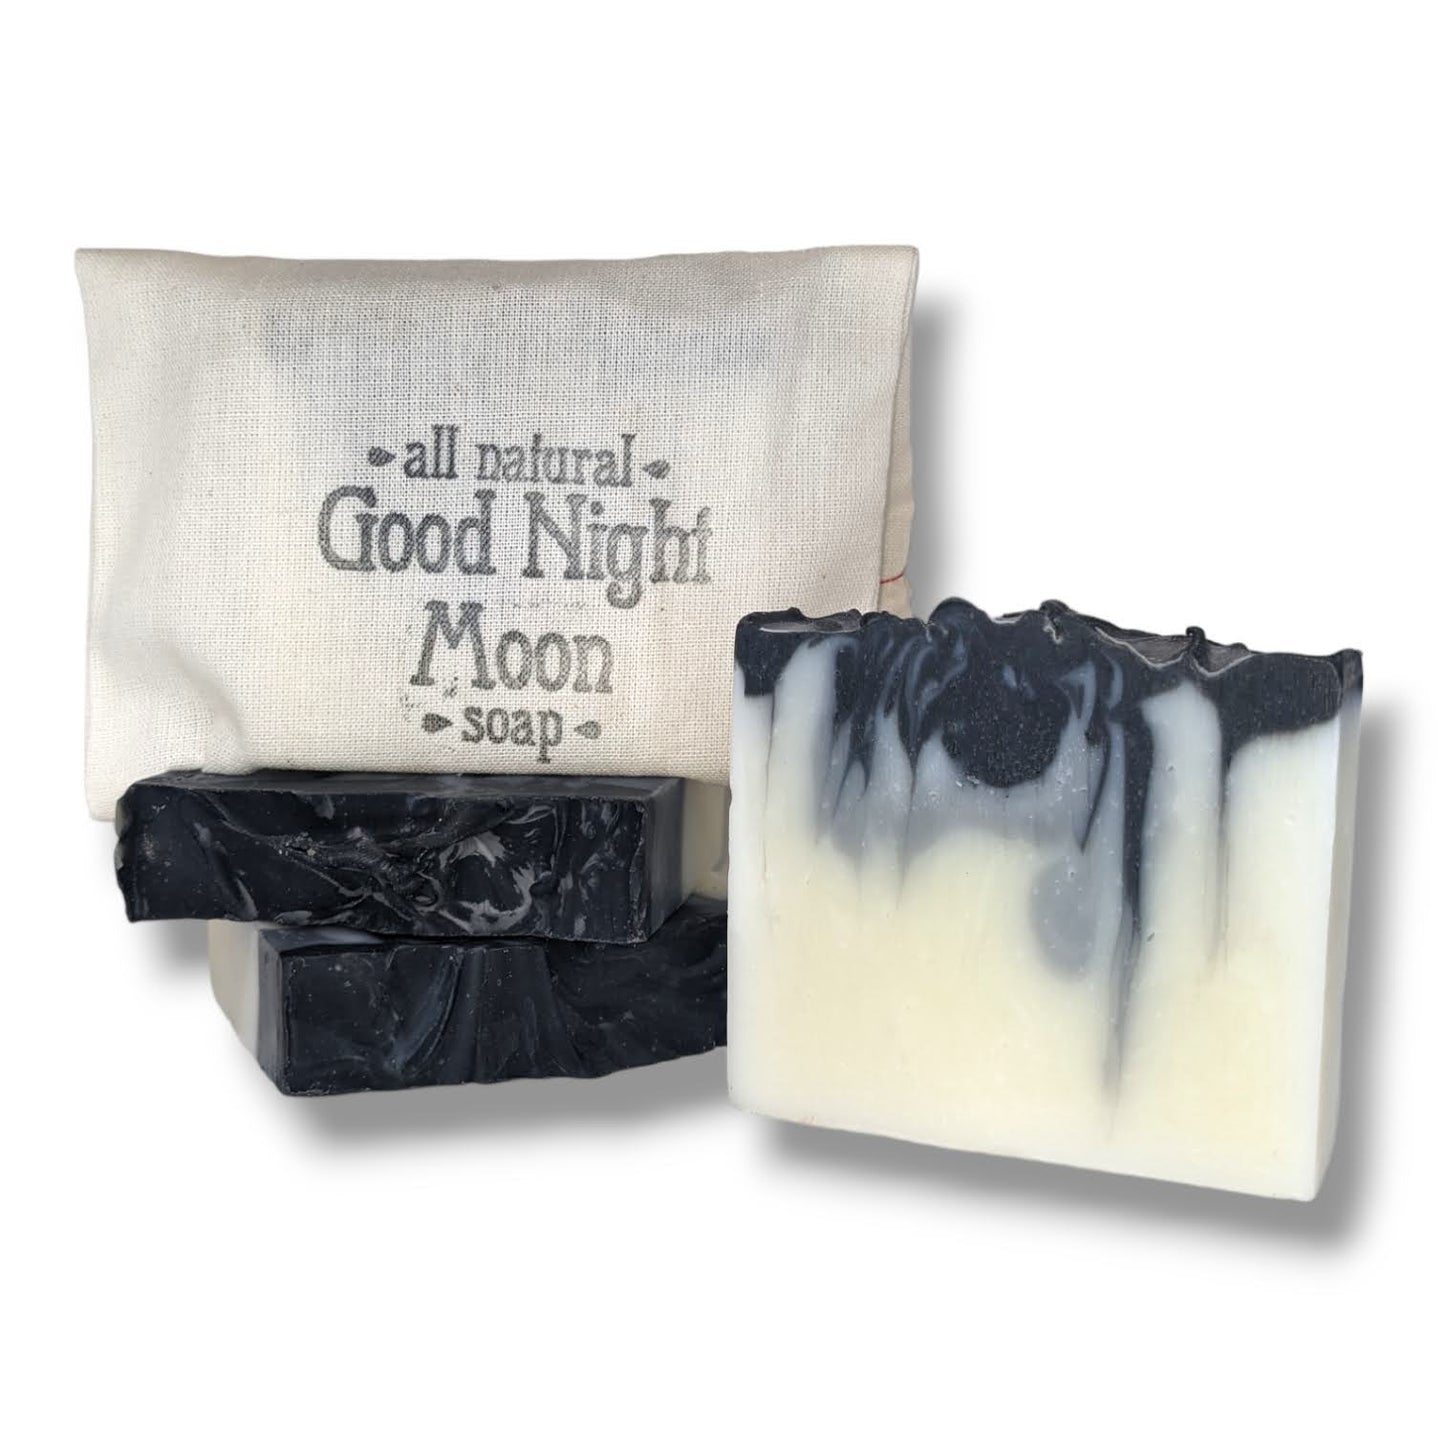 Good Night Moon Soap